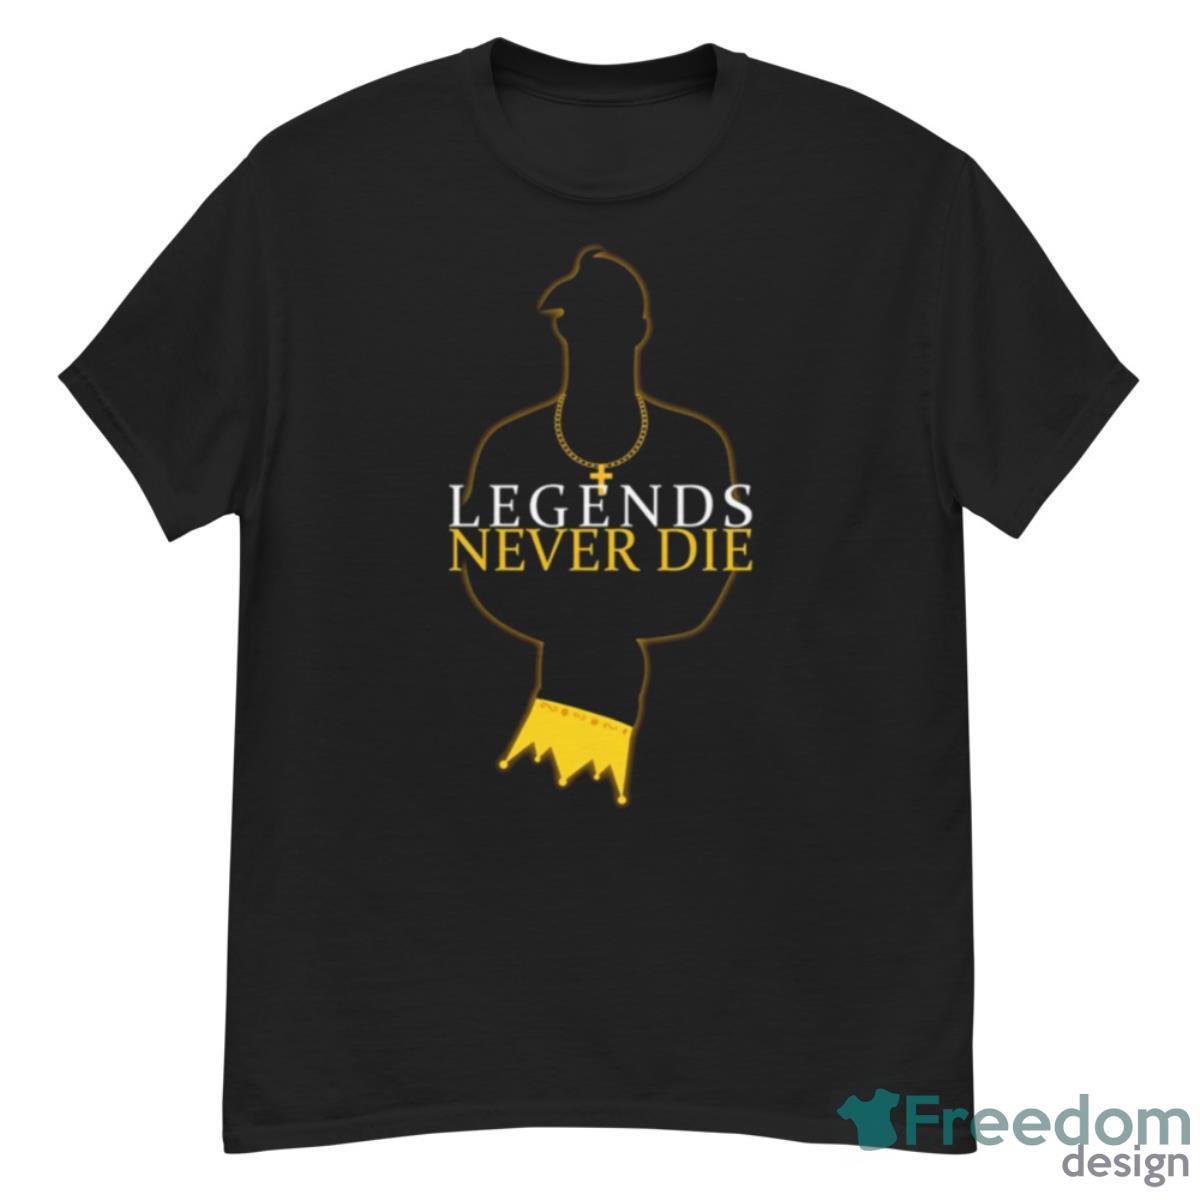 Tupac And Biggie Legends Never Die Design The Notorious B.I.G Biggie shirt - G500 Men’s Classic T-Shirt